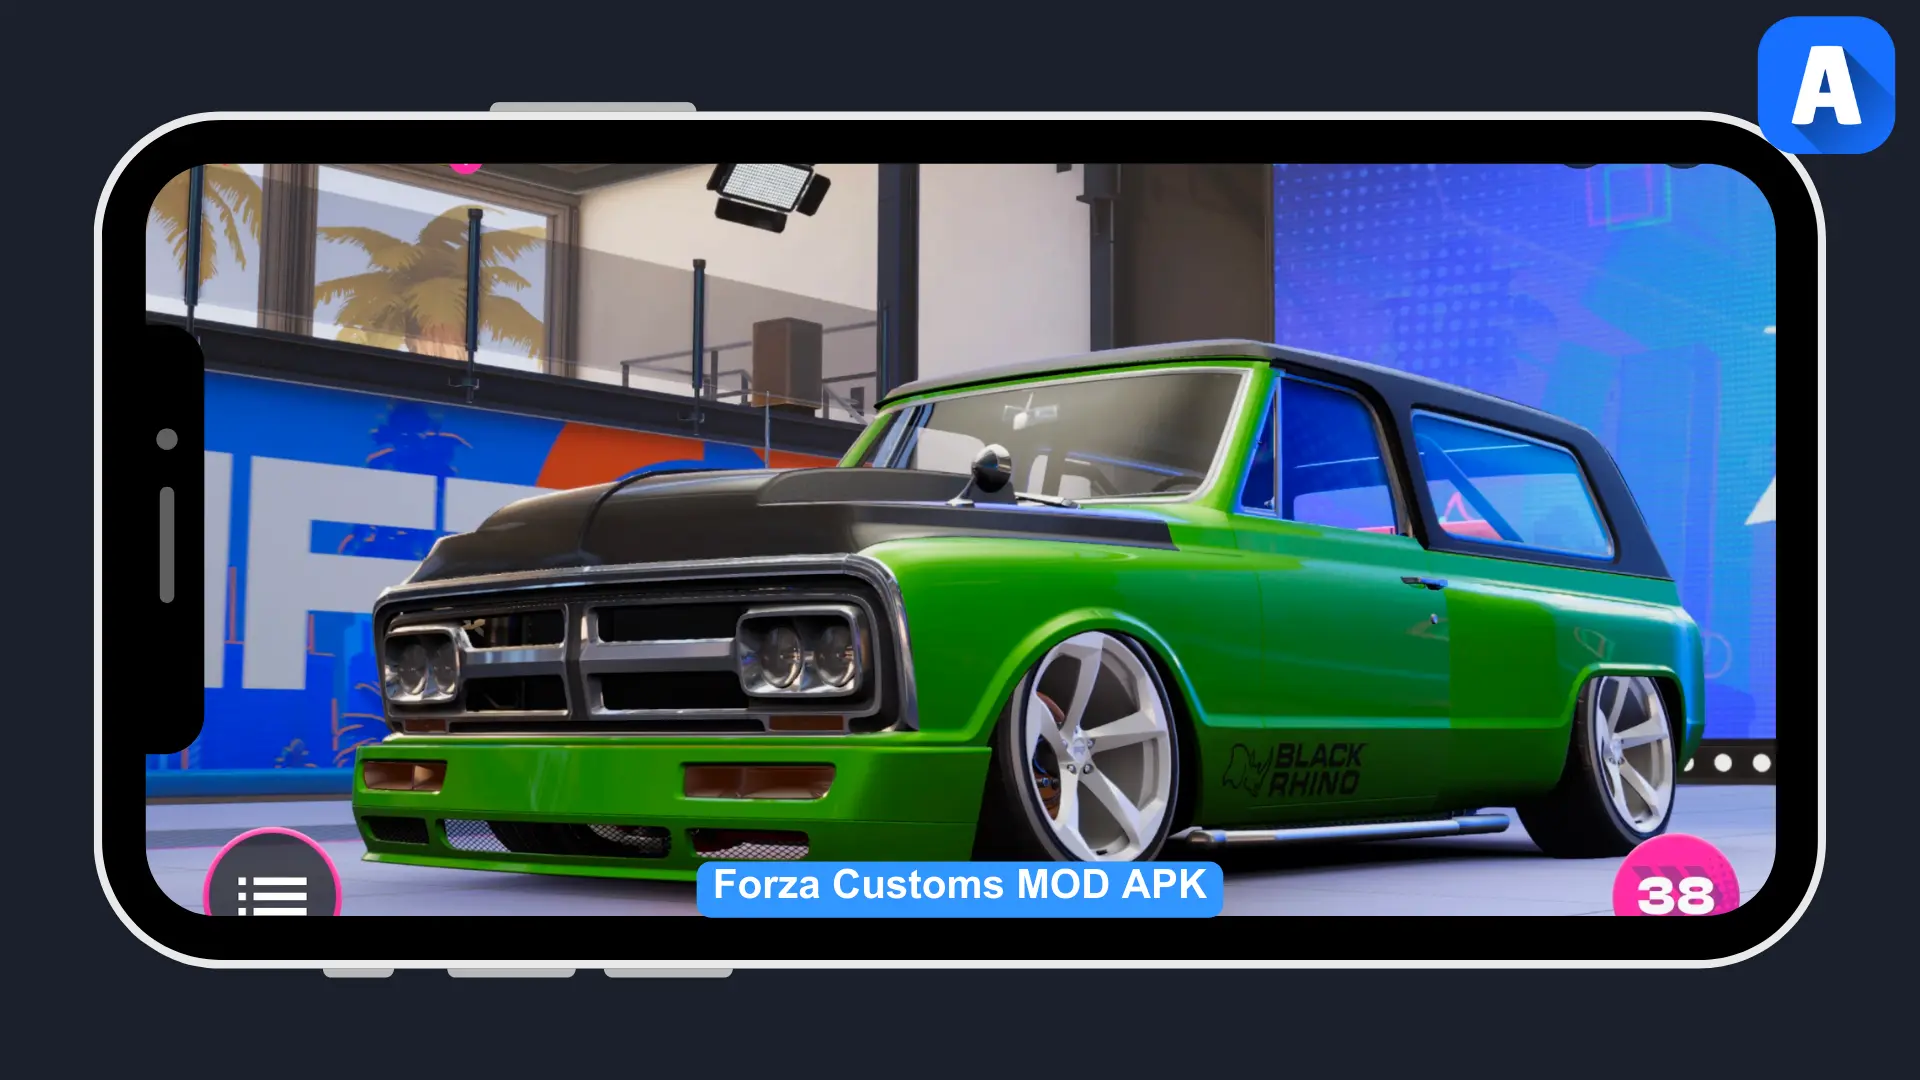 Forza Customs MOD APK Screenshot 2